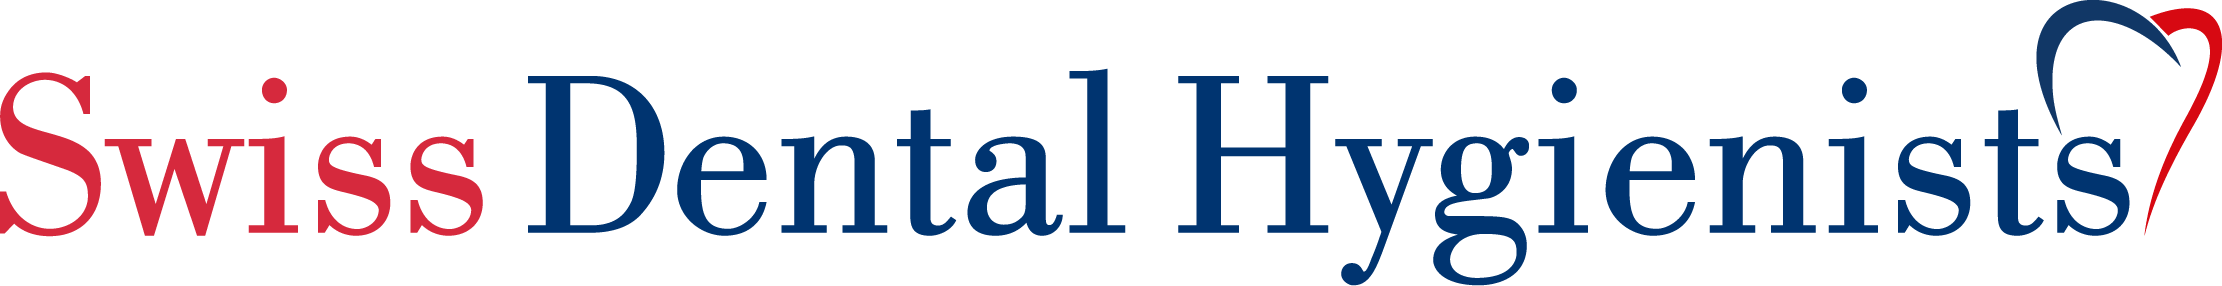 SDH_Verband_Logo